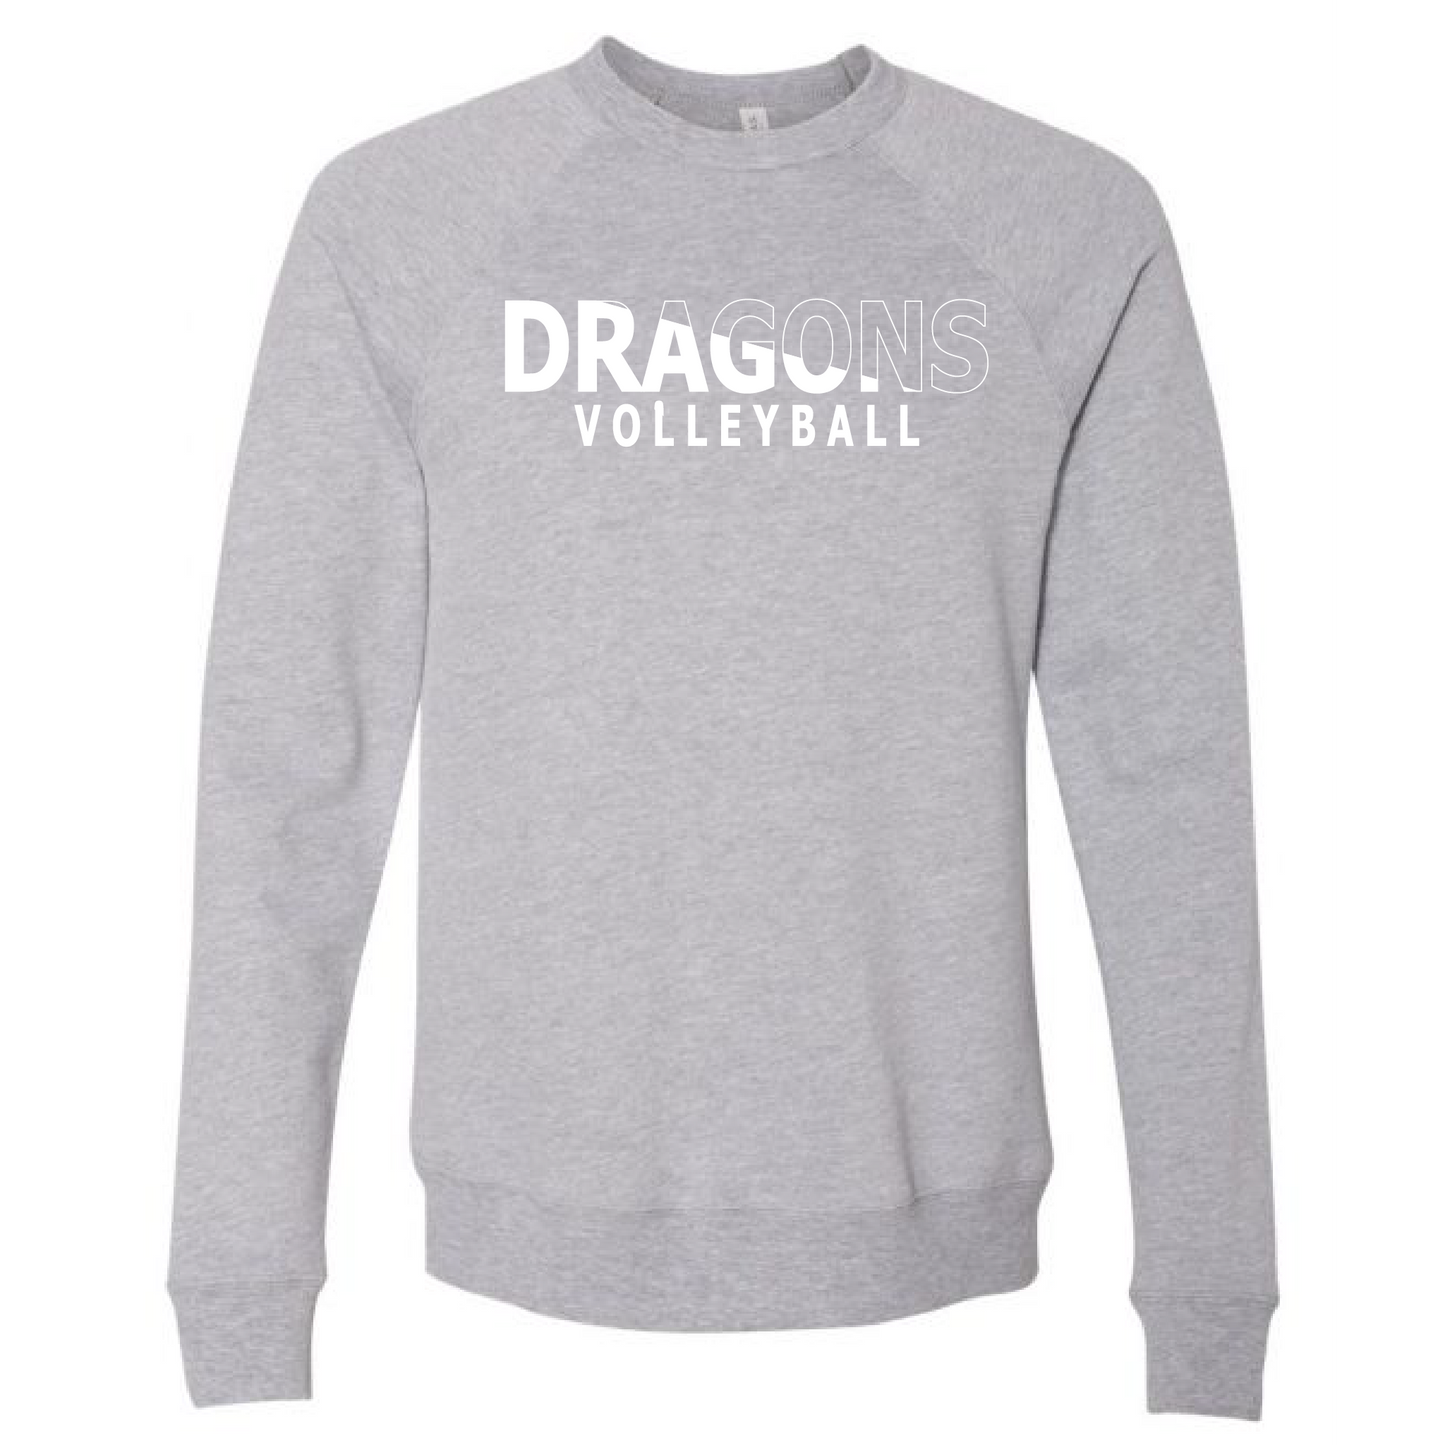 Unisex Sweatshirt - Dragons Volleyball Slashed White